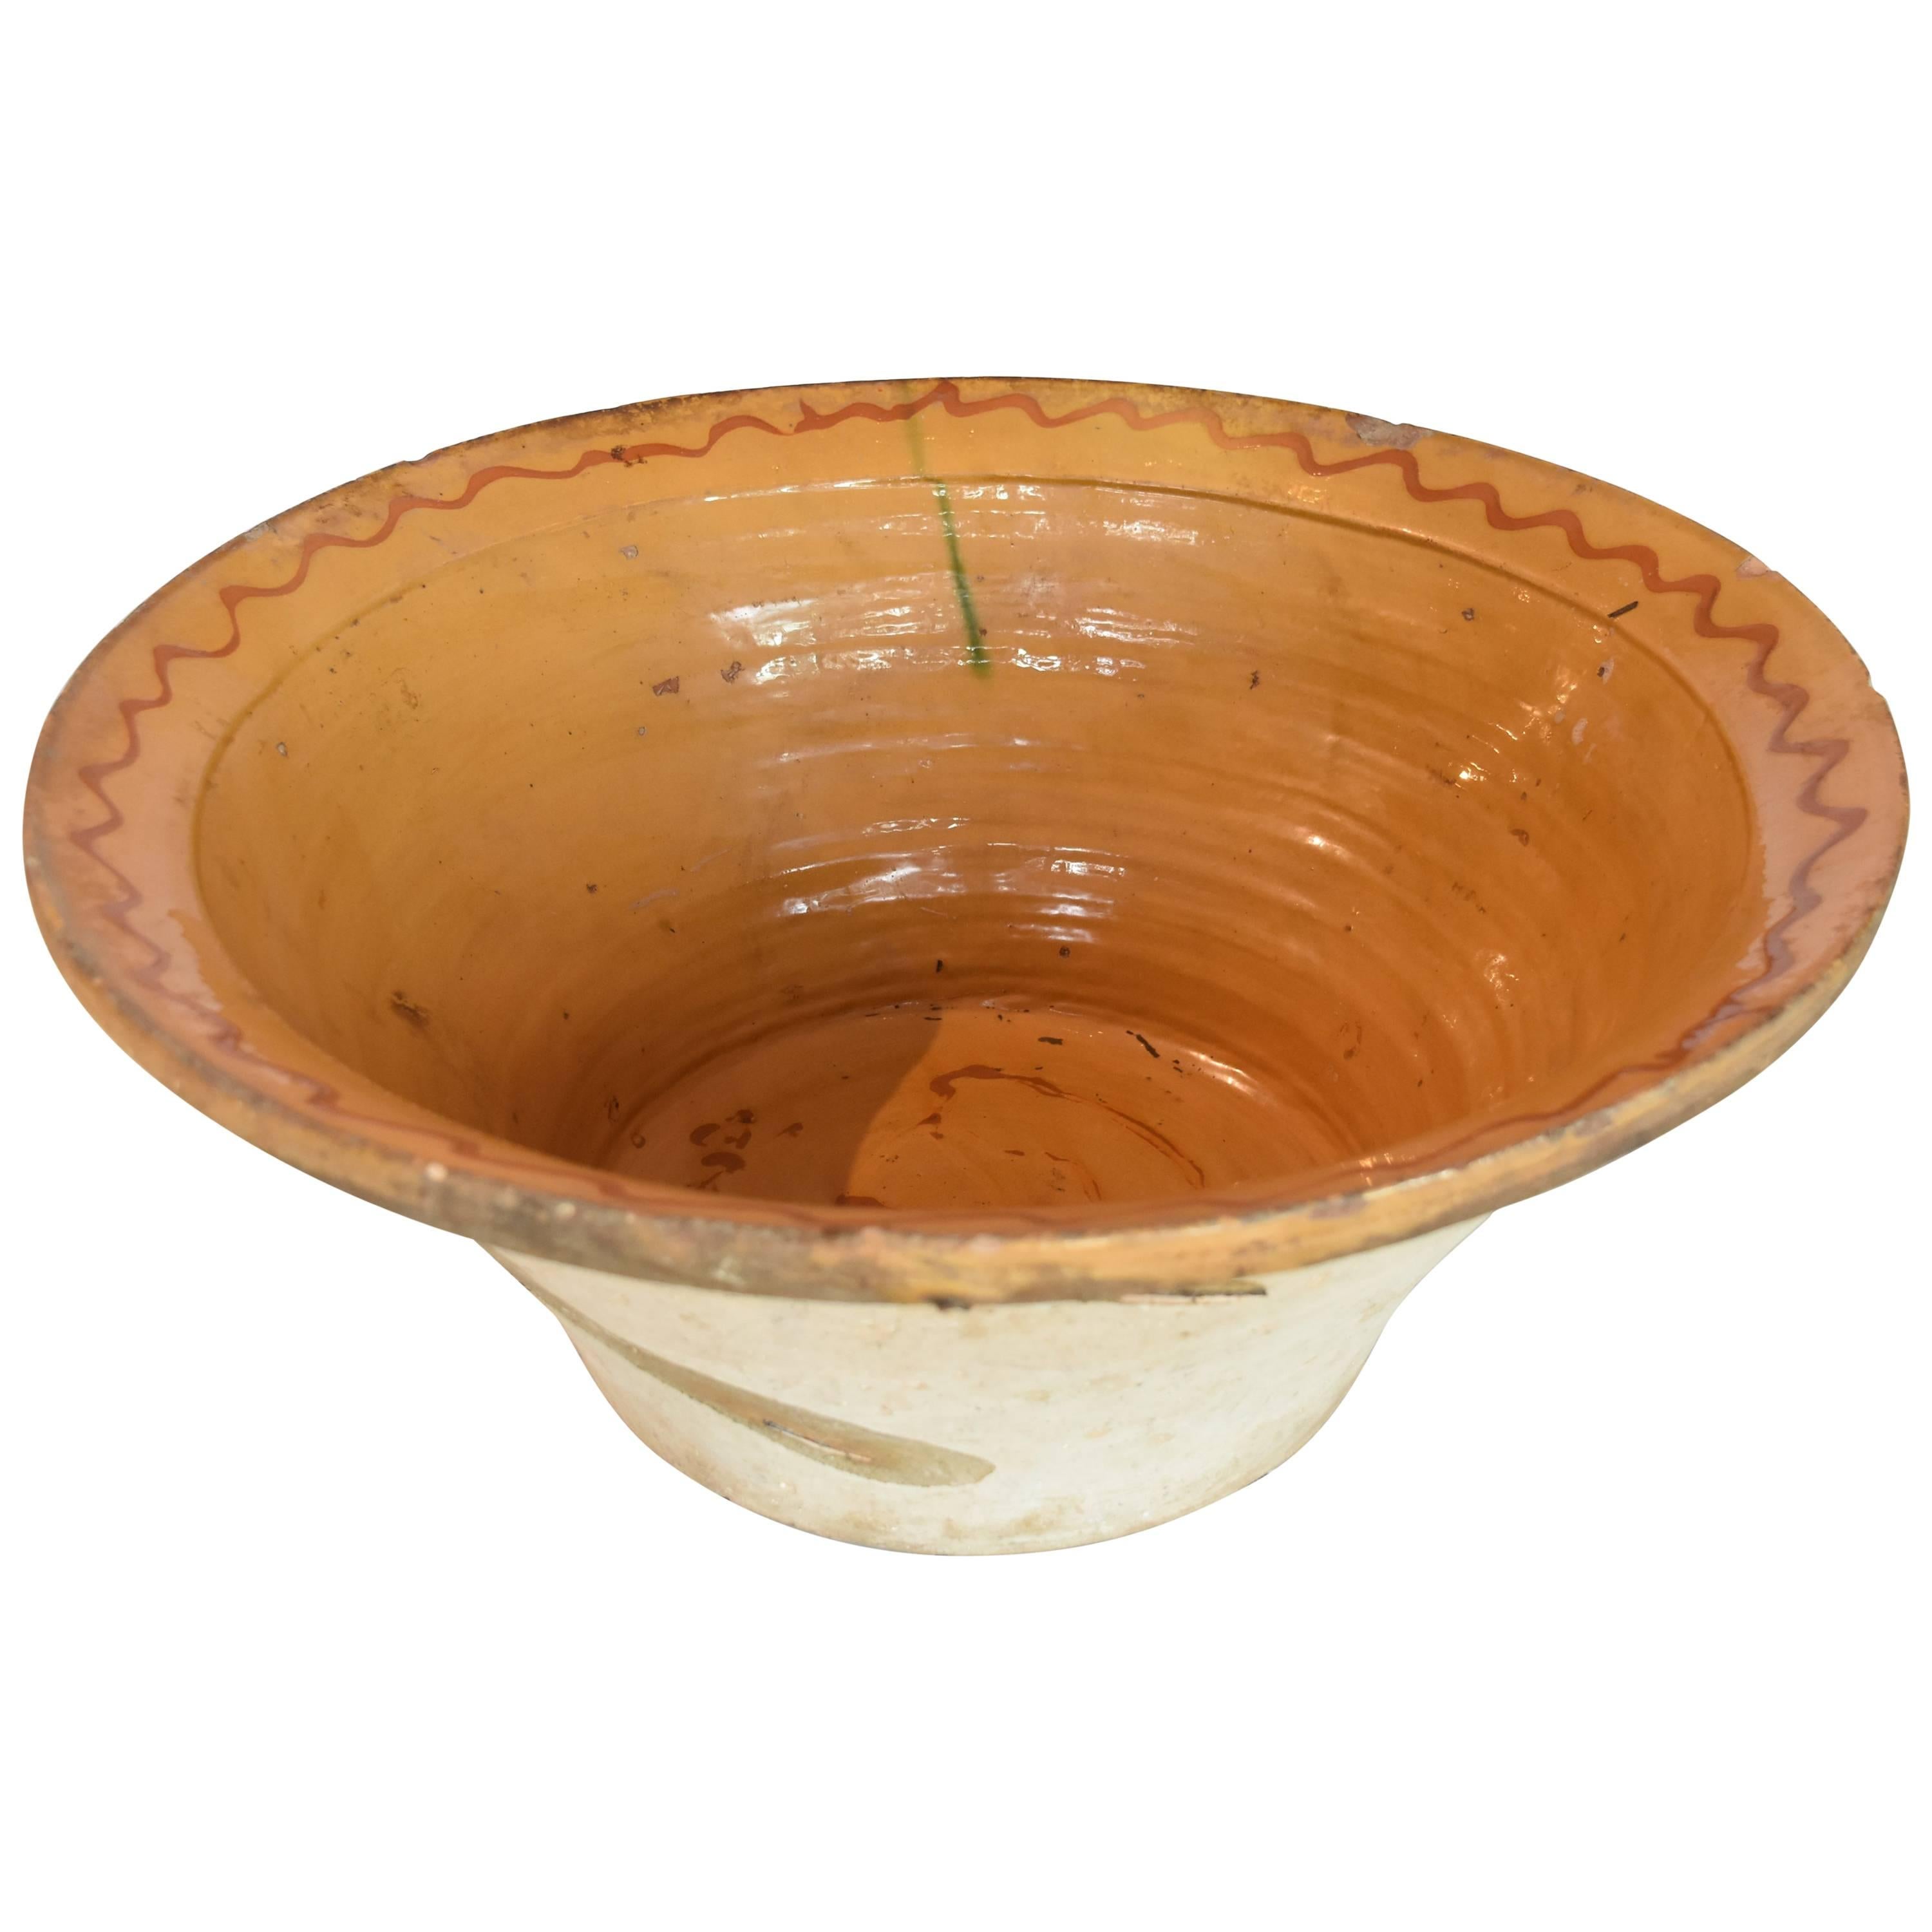 19th Century Spanish Ceramic Bowl with Mustard Yellow and Burnt Orange Design